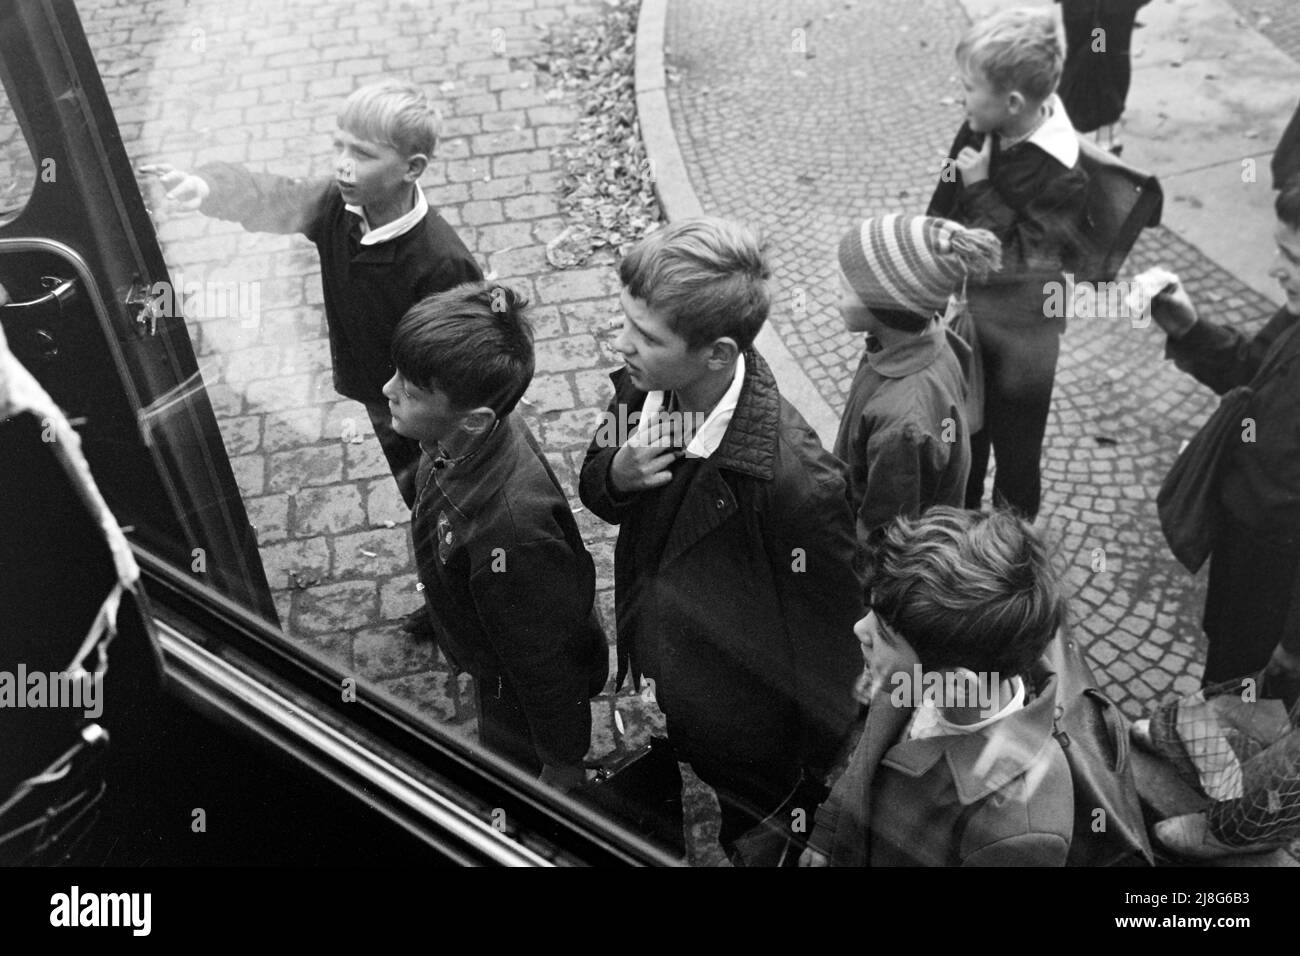 Kinder in Oppeln, Woiwodschaft Oppeln, 1967. Children in Opole, Opole Voivodeship, 1967. Stock Photo